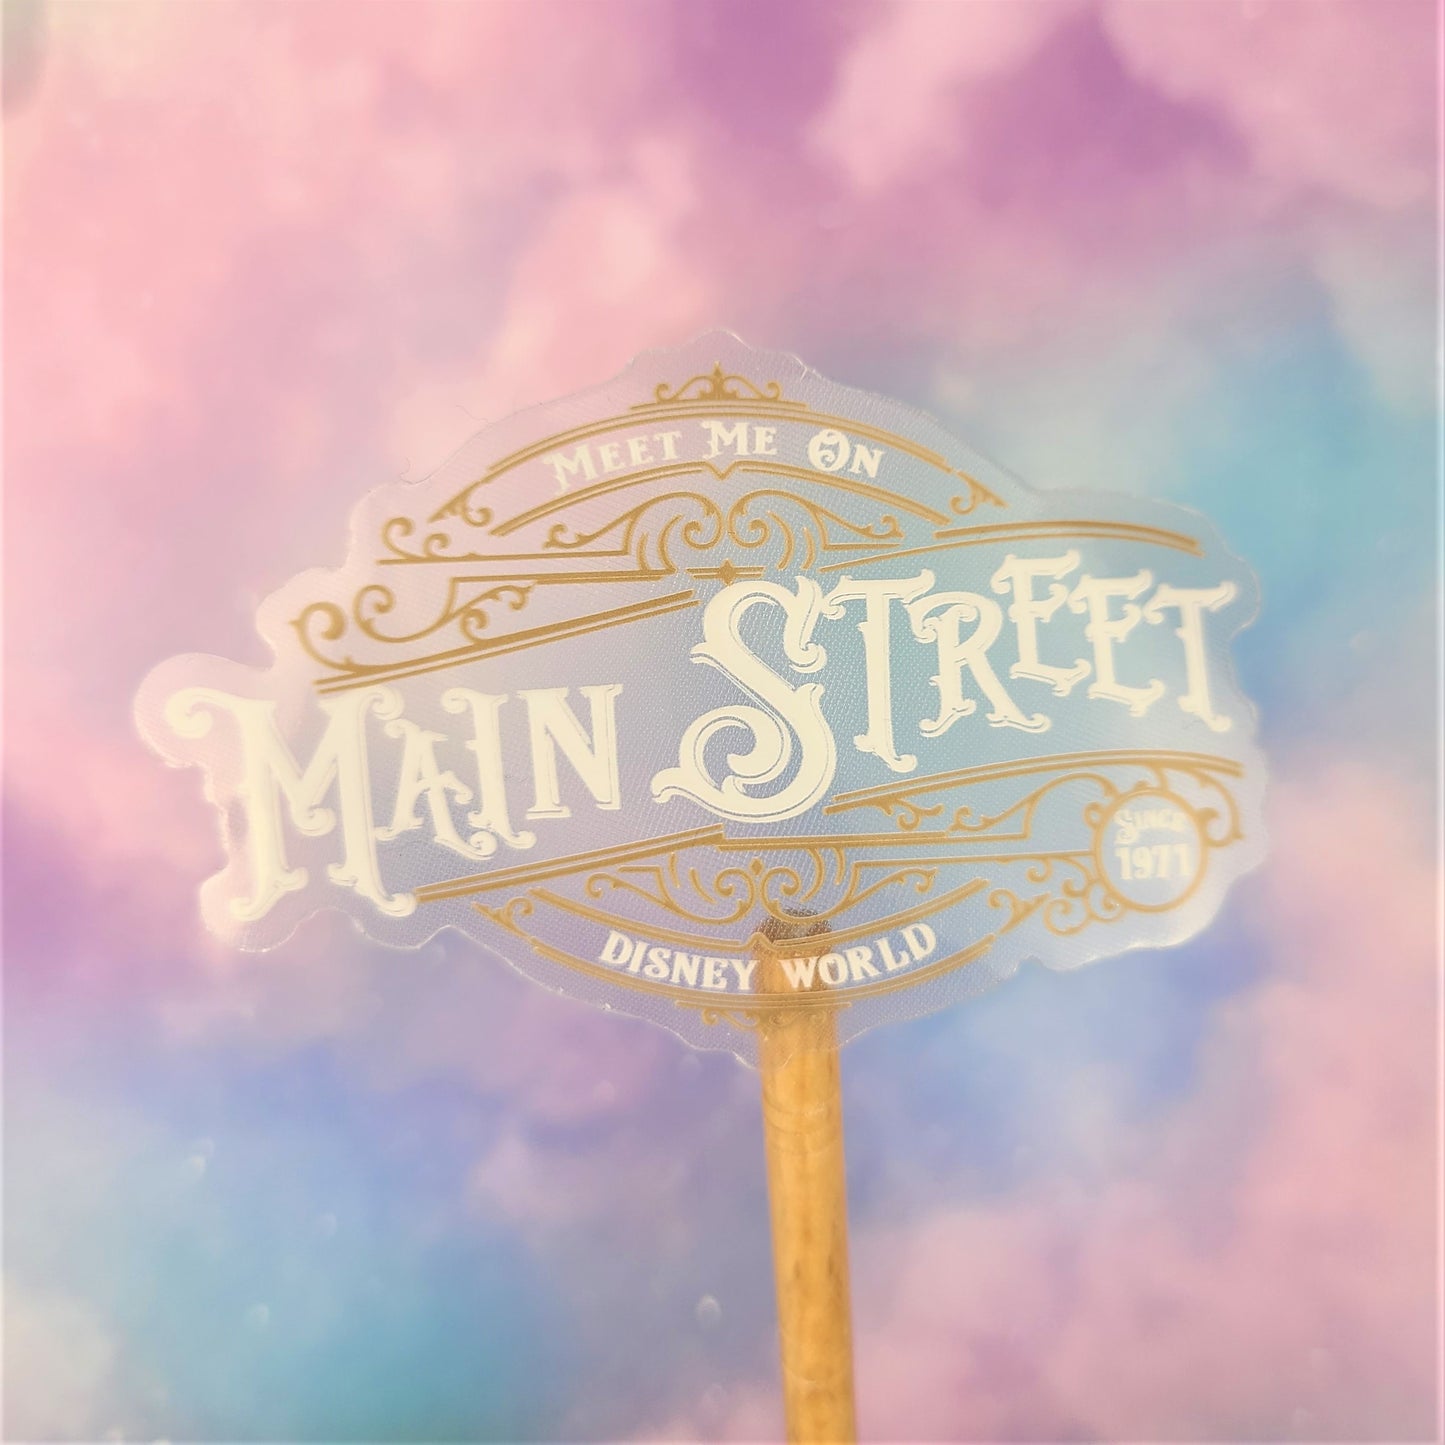 Meet Me on Main Street Clear Vinyl Sticker